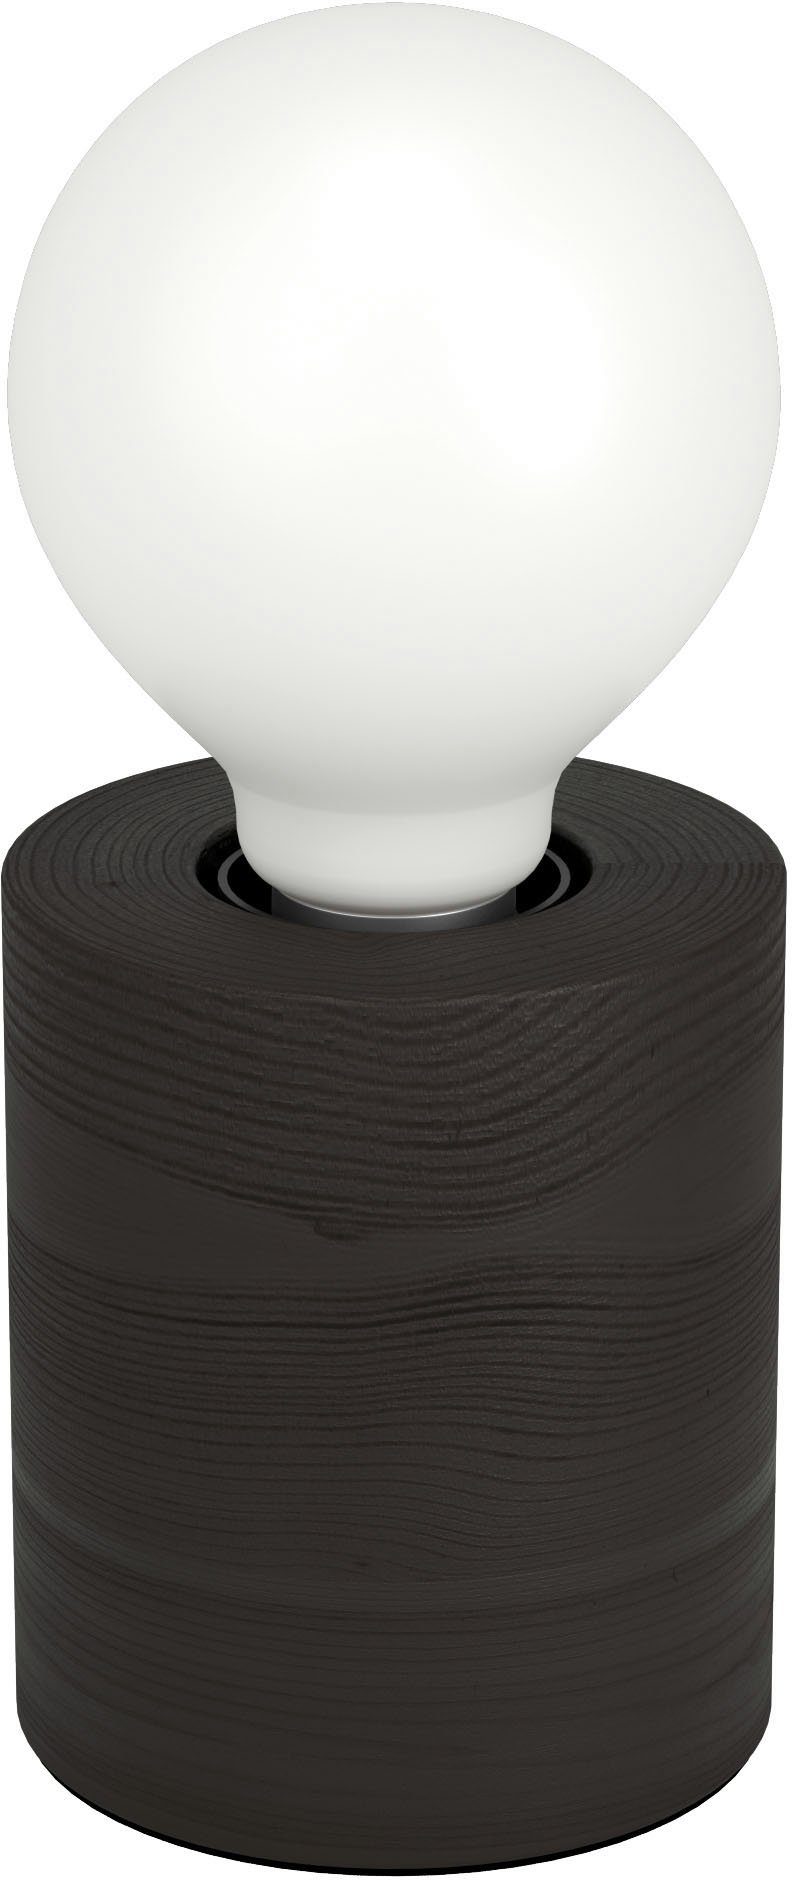 EGLO Tischleuchte TURIALDO 1, Leuchtmittel wechselbar, ohne Leuchtmittel, Tischleuchte in schwarz aus Holz, Stahl - exkl. E27 - 28W | Tischlampen